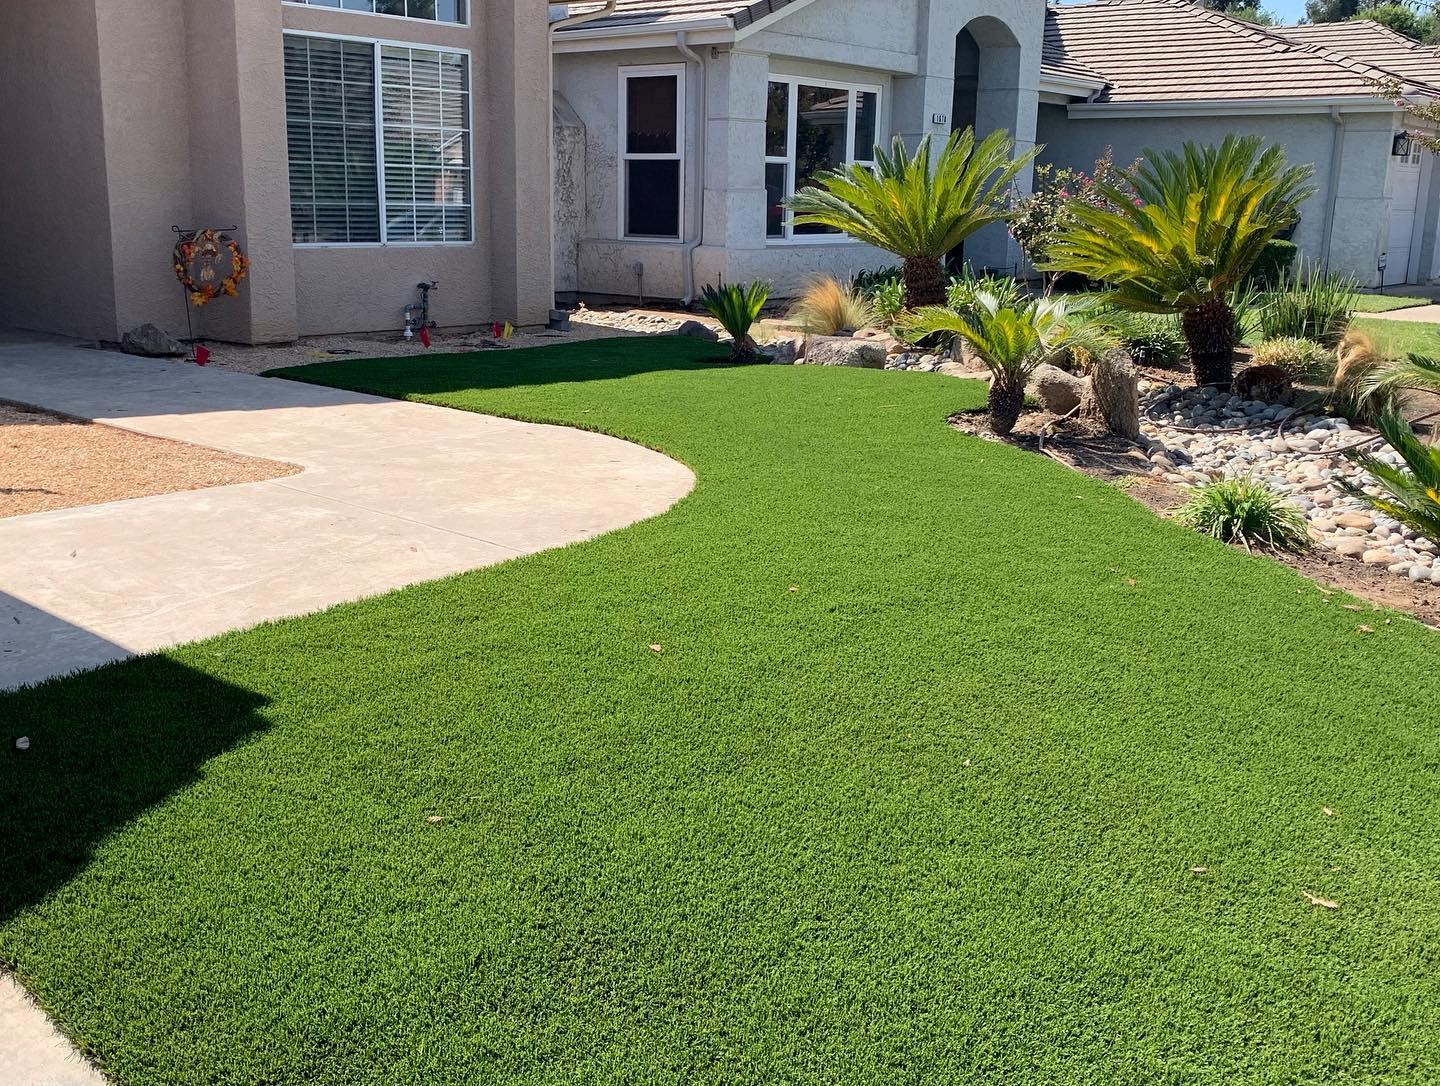 A synthetic grass lawn in a Fresno backyard.